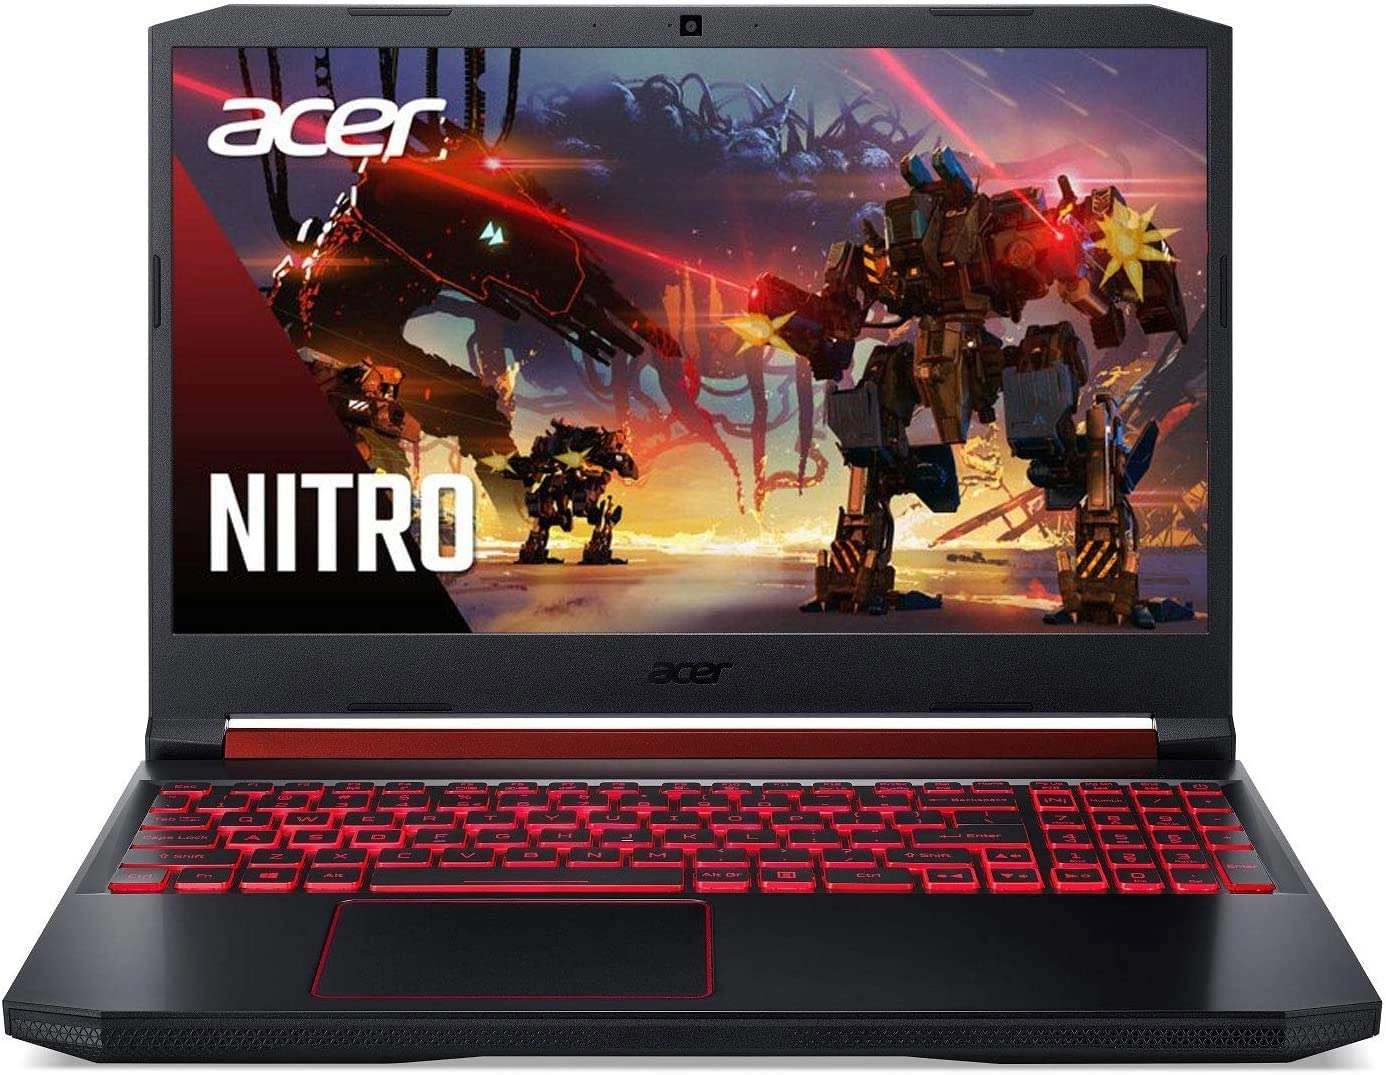 Acer AN515 laptop image